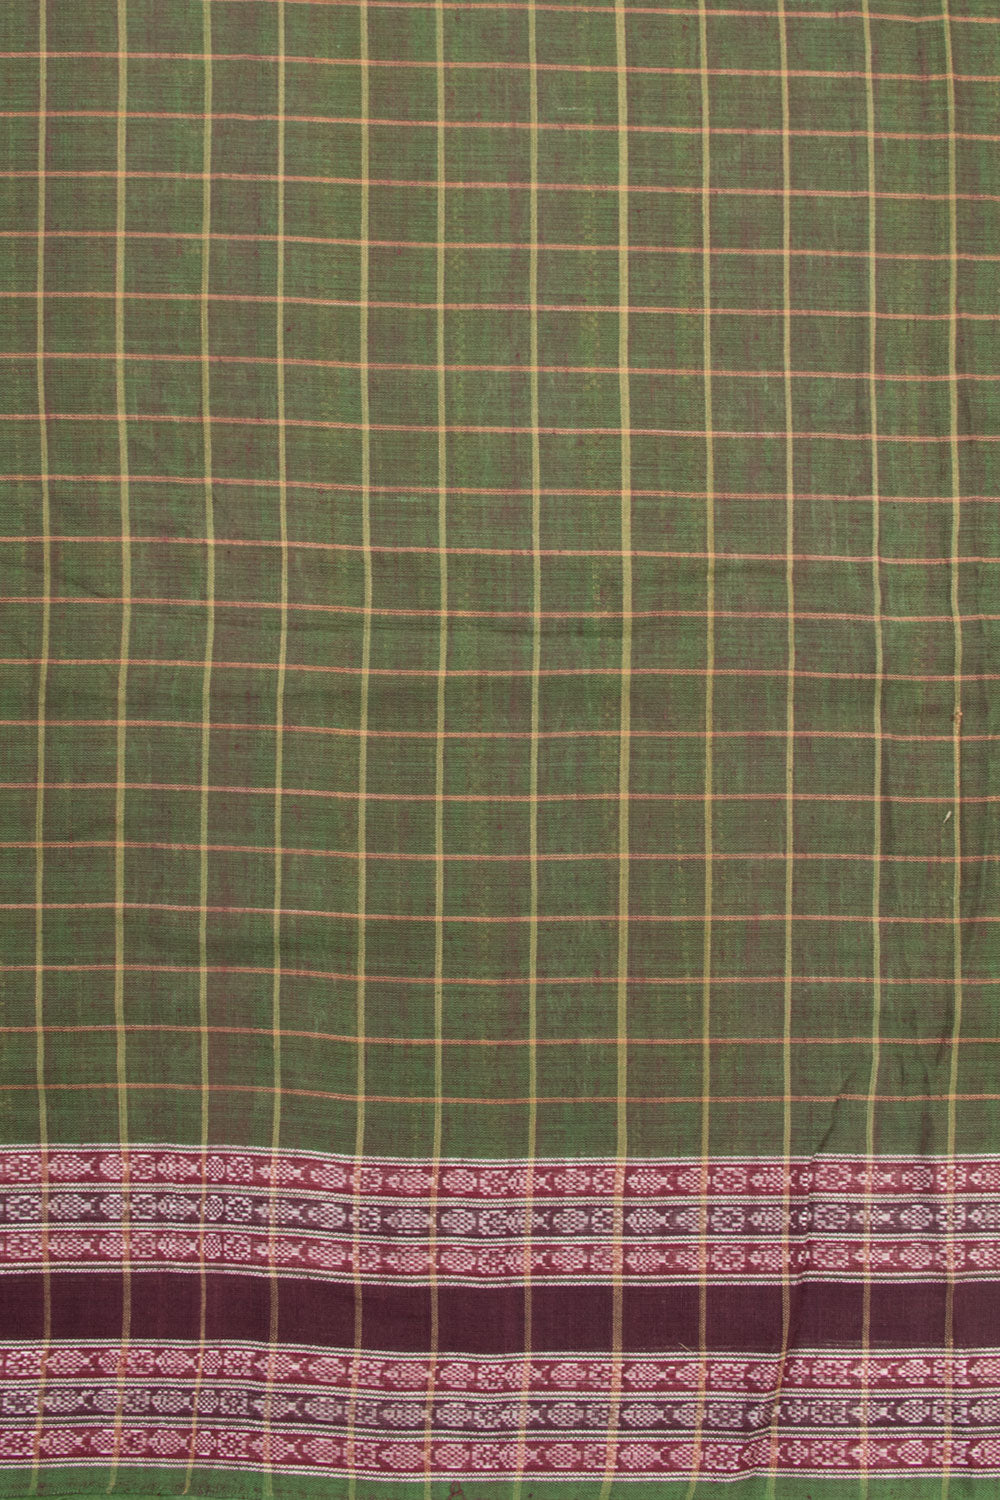 Dual Tone Handloom Odisha Cotton Saree